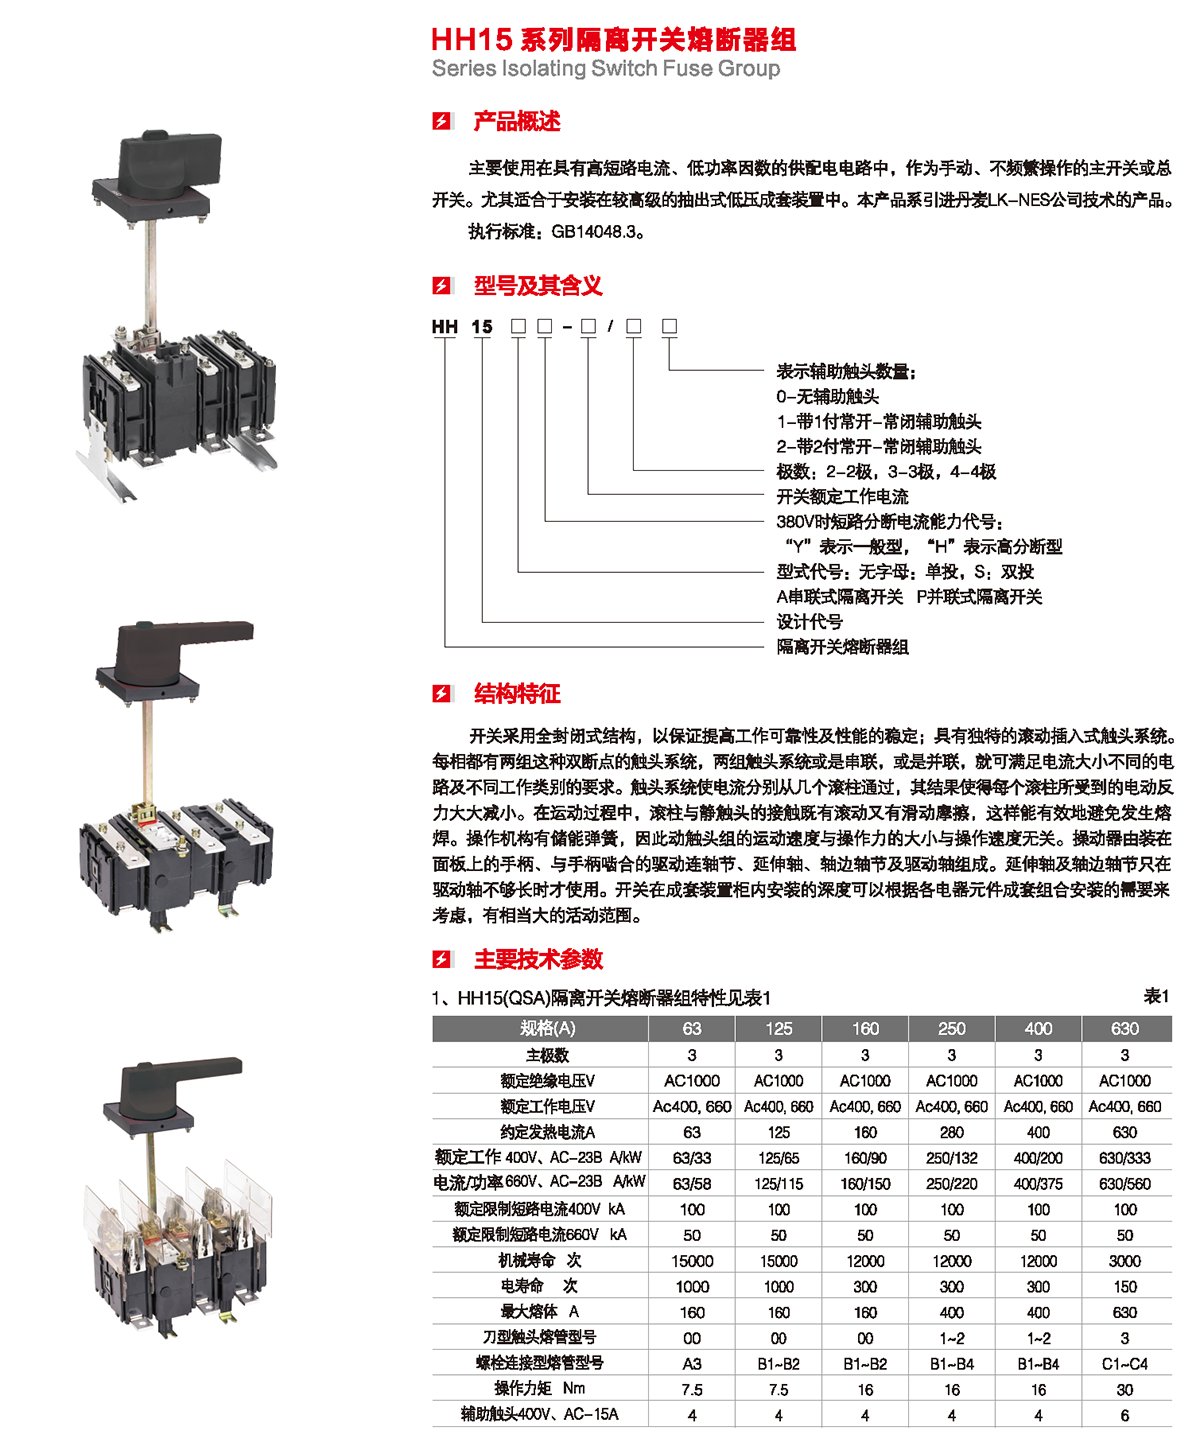 HH15系列隔离开关熔断器组产品概述、型号含义、结构特征、技术参数